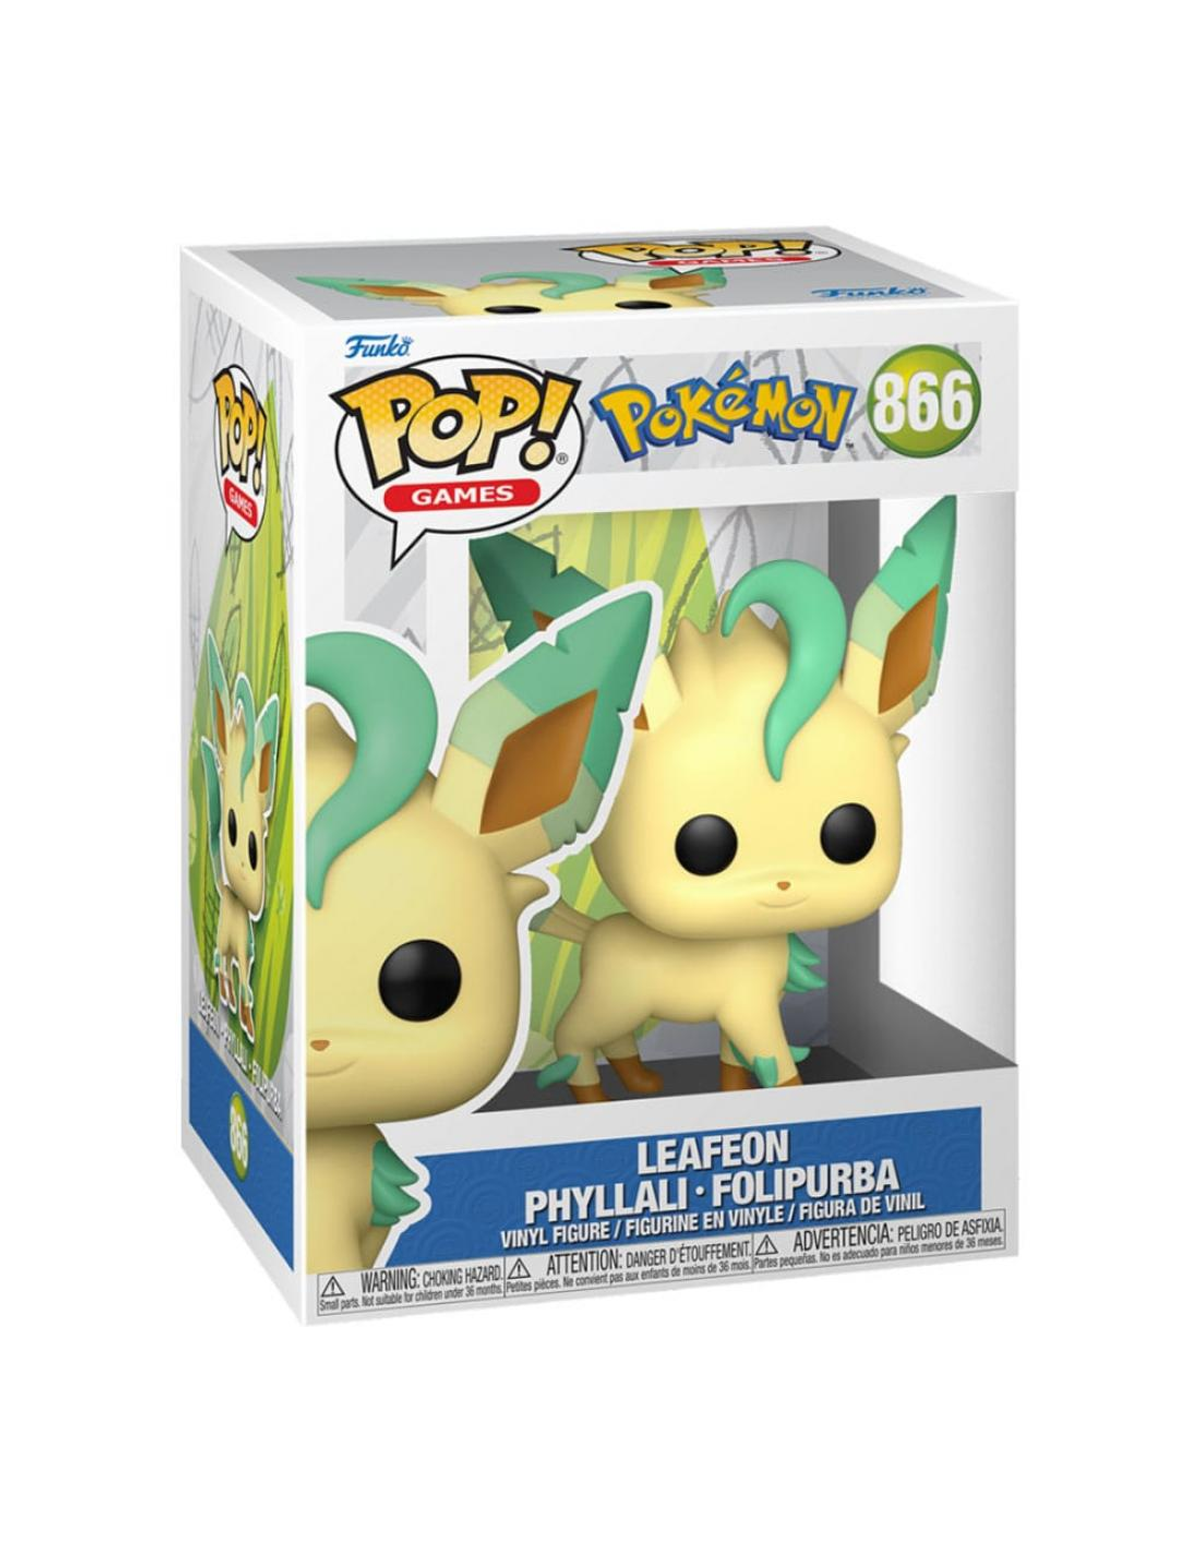 Phyllali Folipurba Leafeon - POP Pokemon - / /